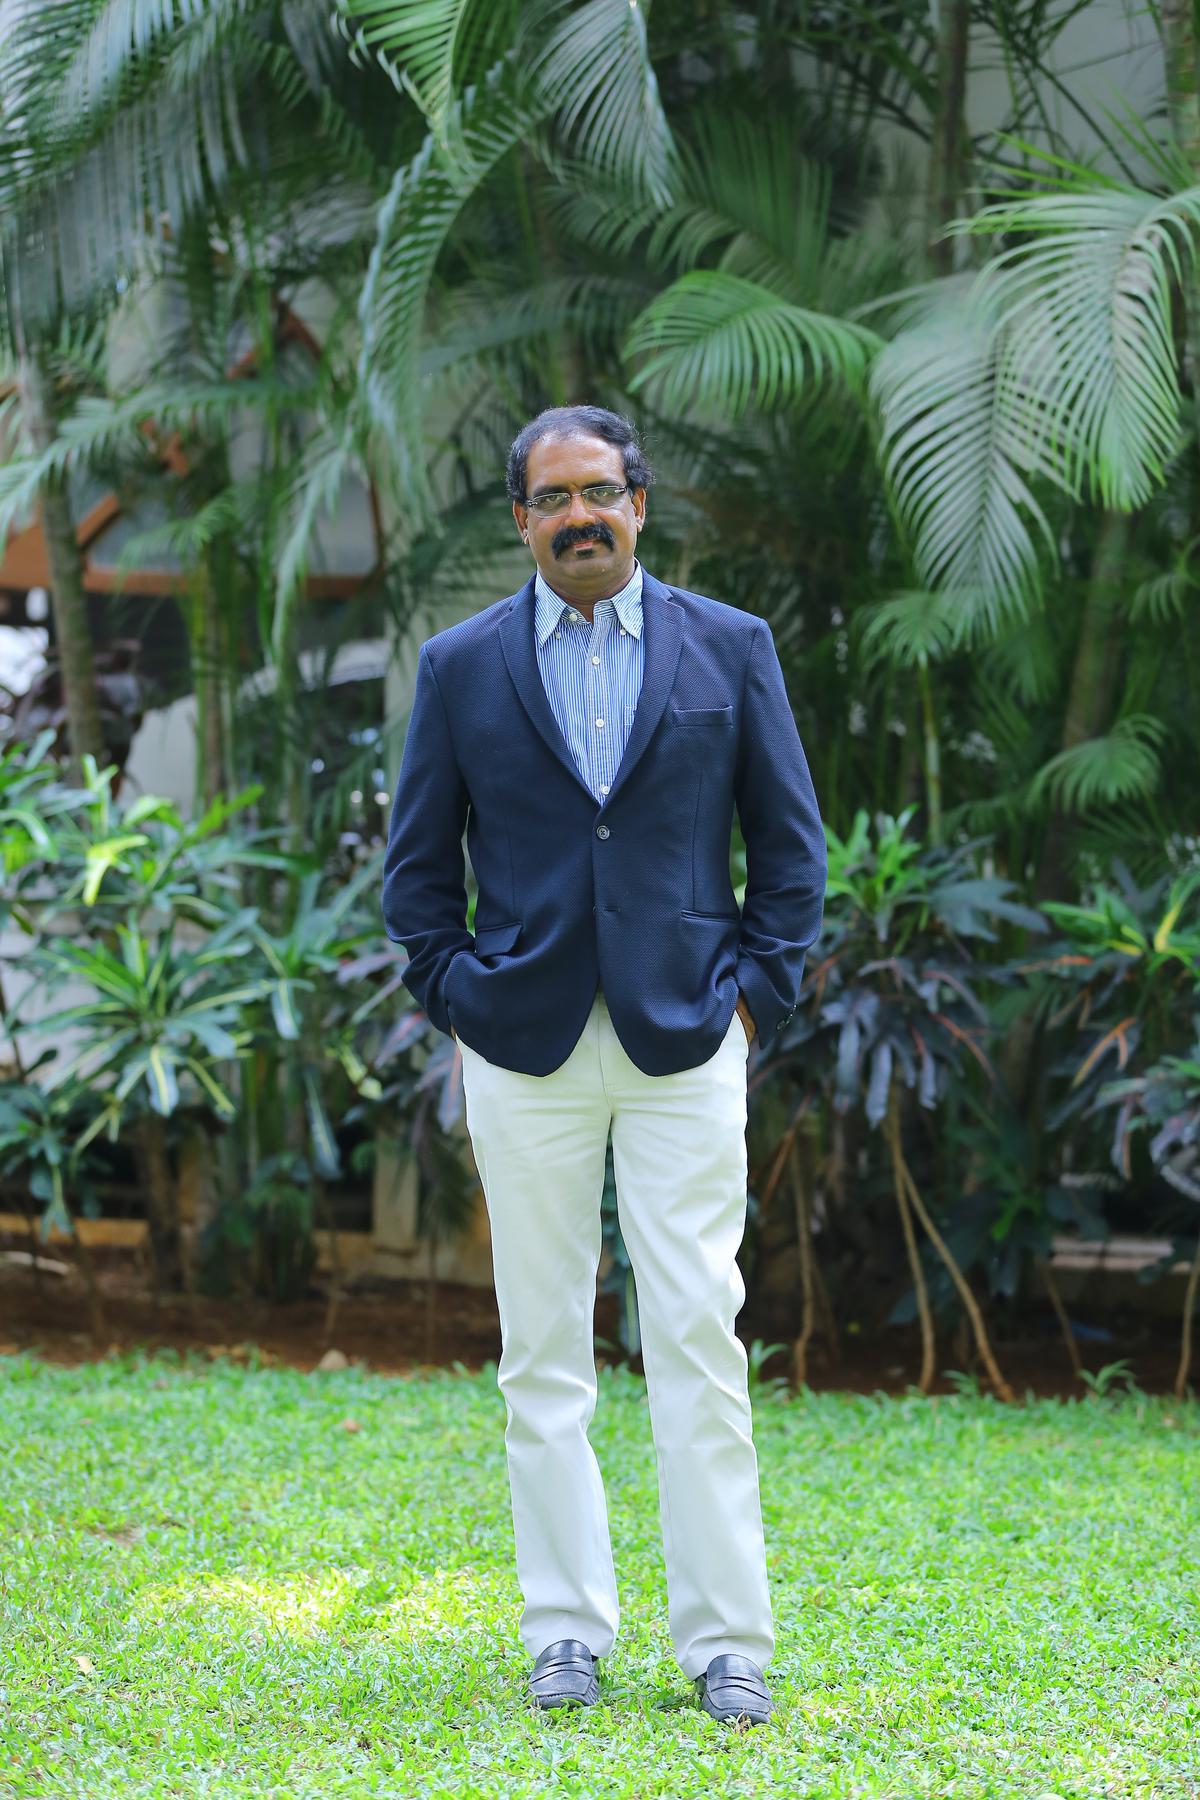 Srinivas Dasari, Director and CEO of 7 Highway Plaza